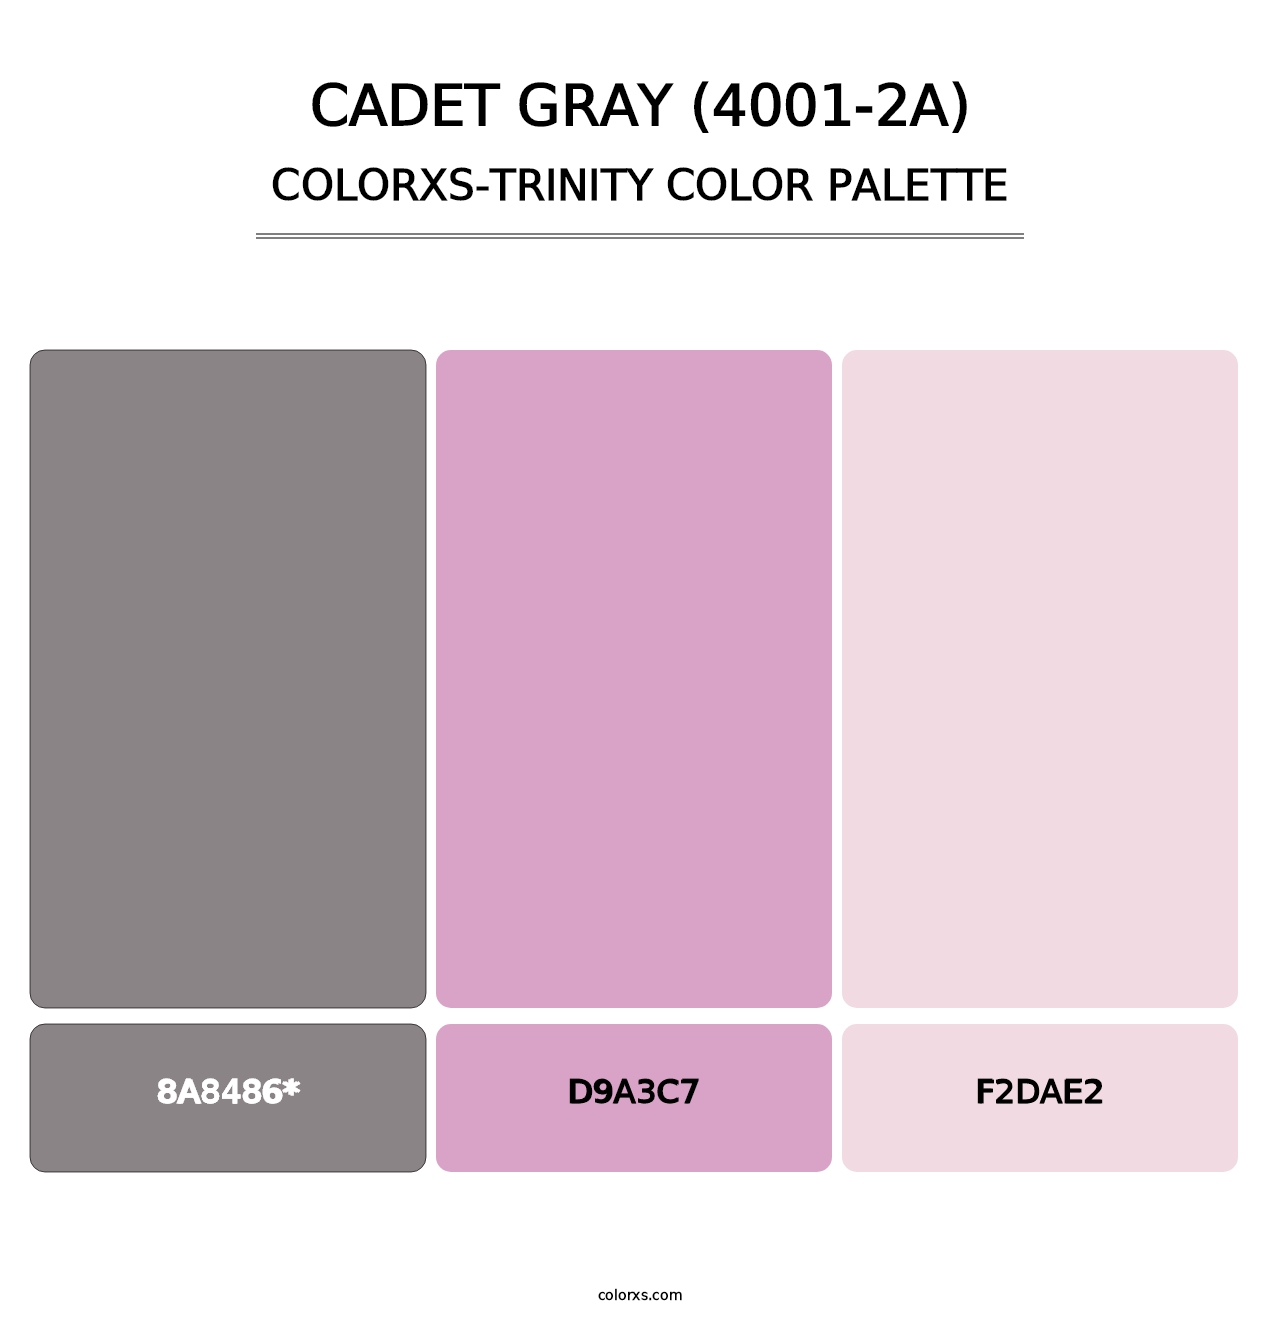 Cadet Gray (4001-2A) - Colorxs Trinity Palette